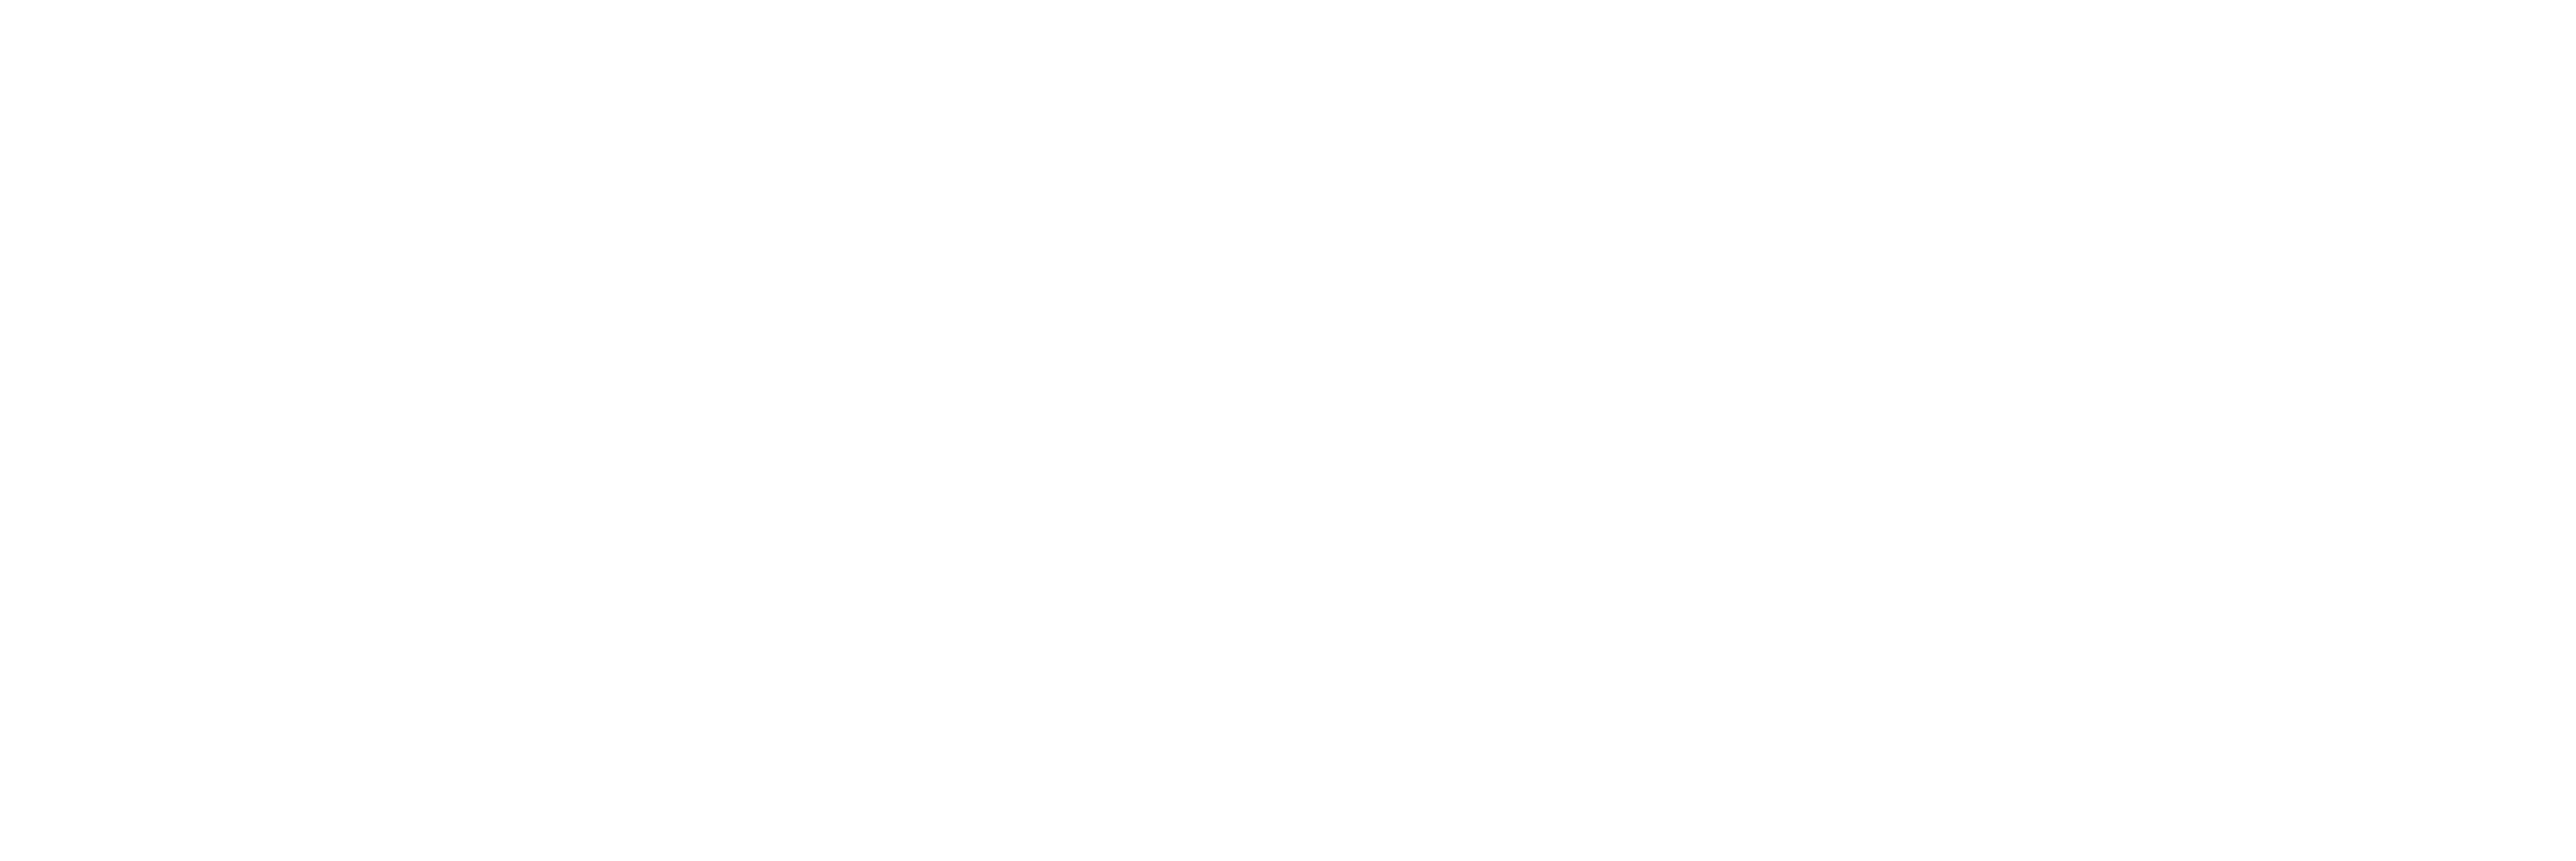 Antitrust Trade Regulation Section